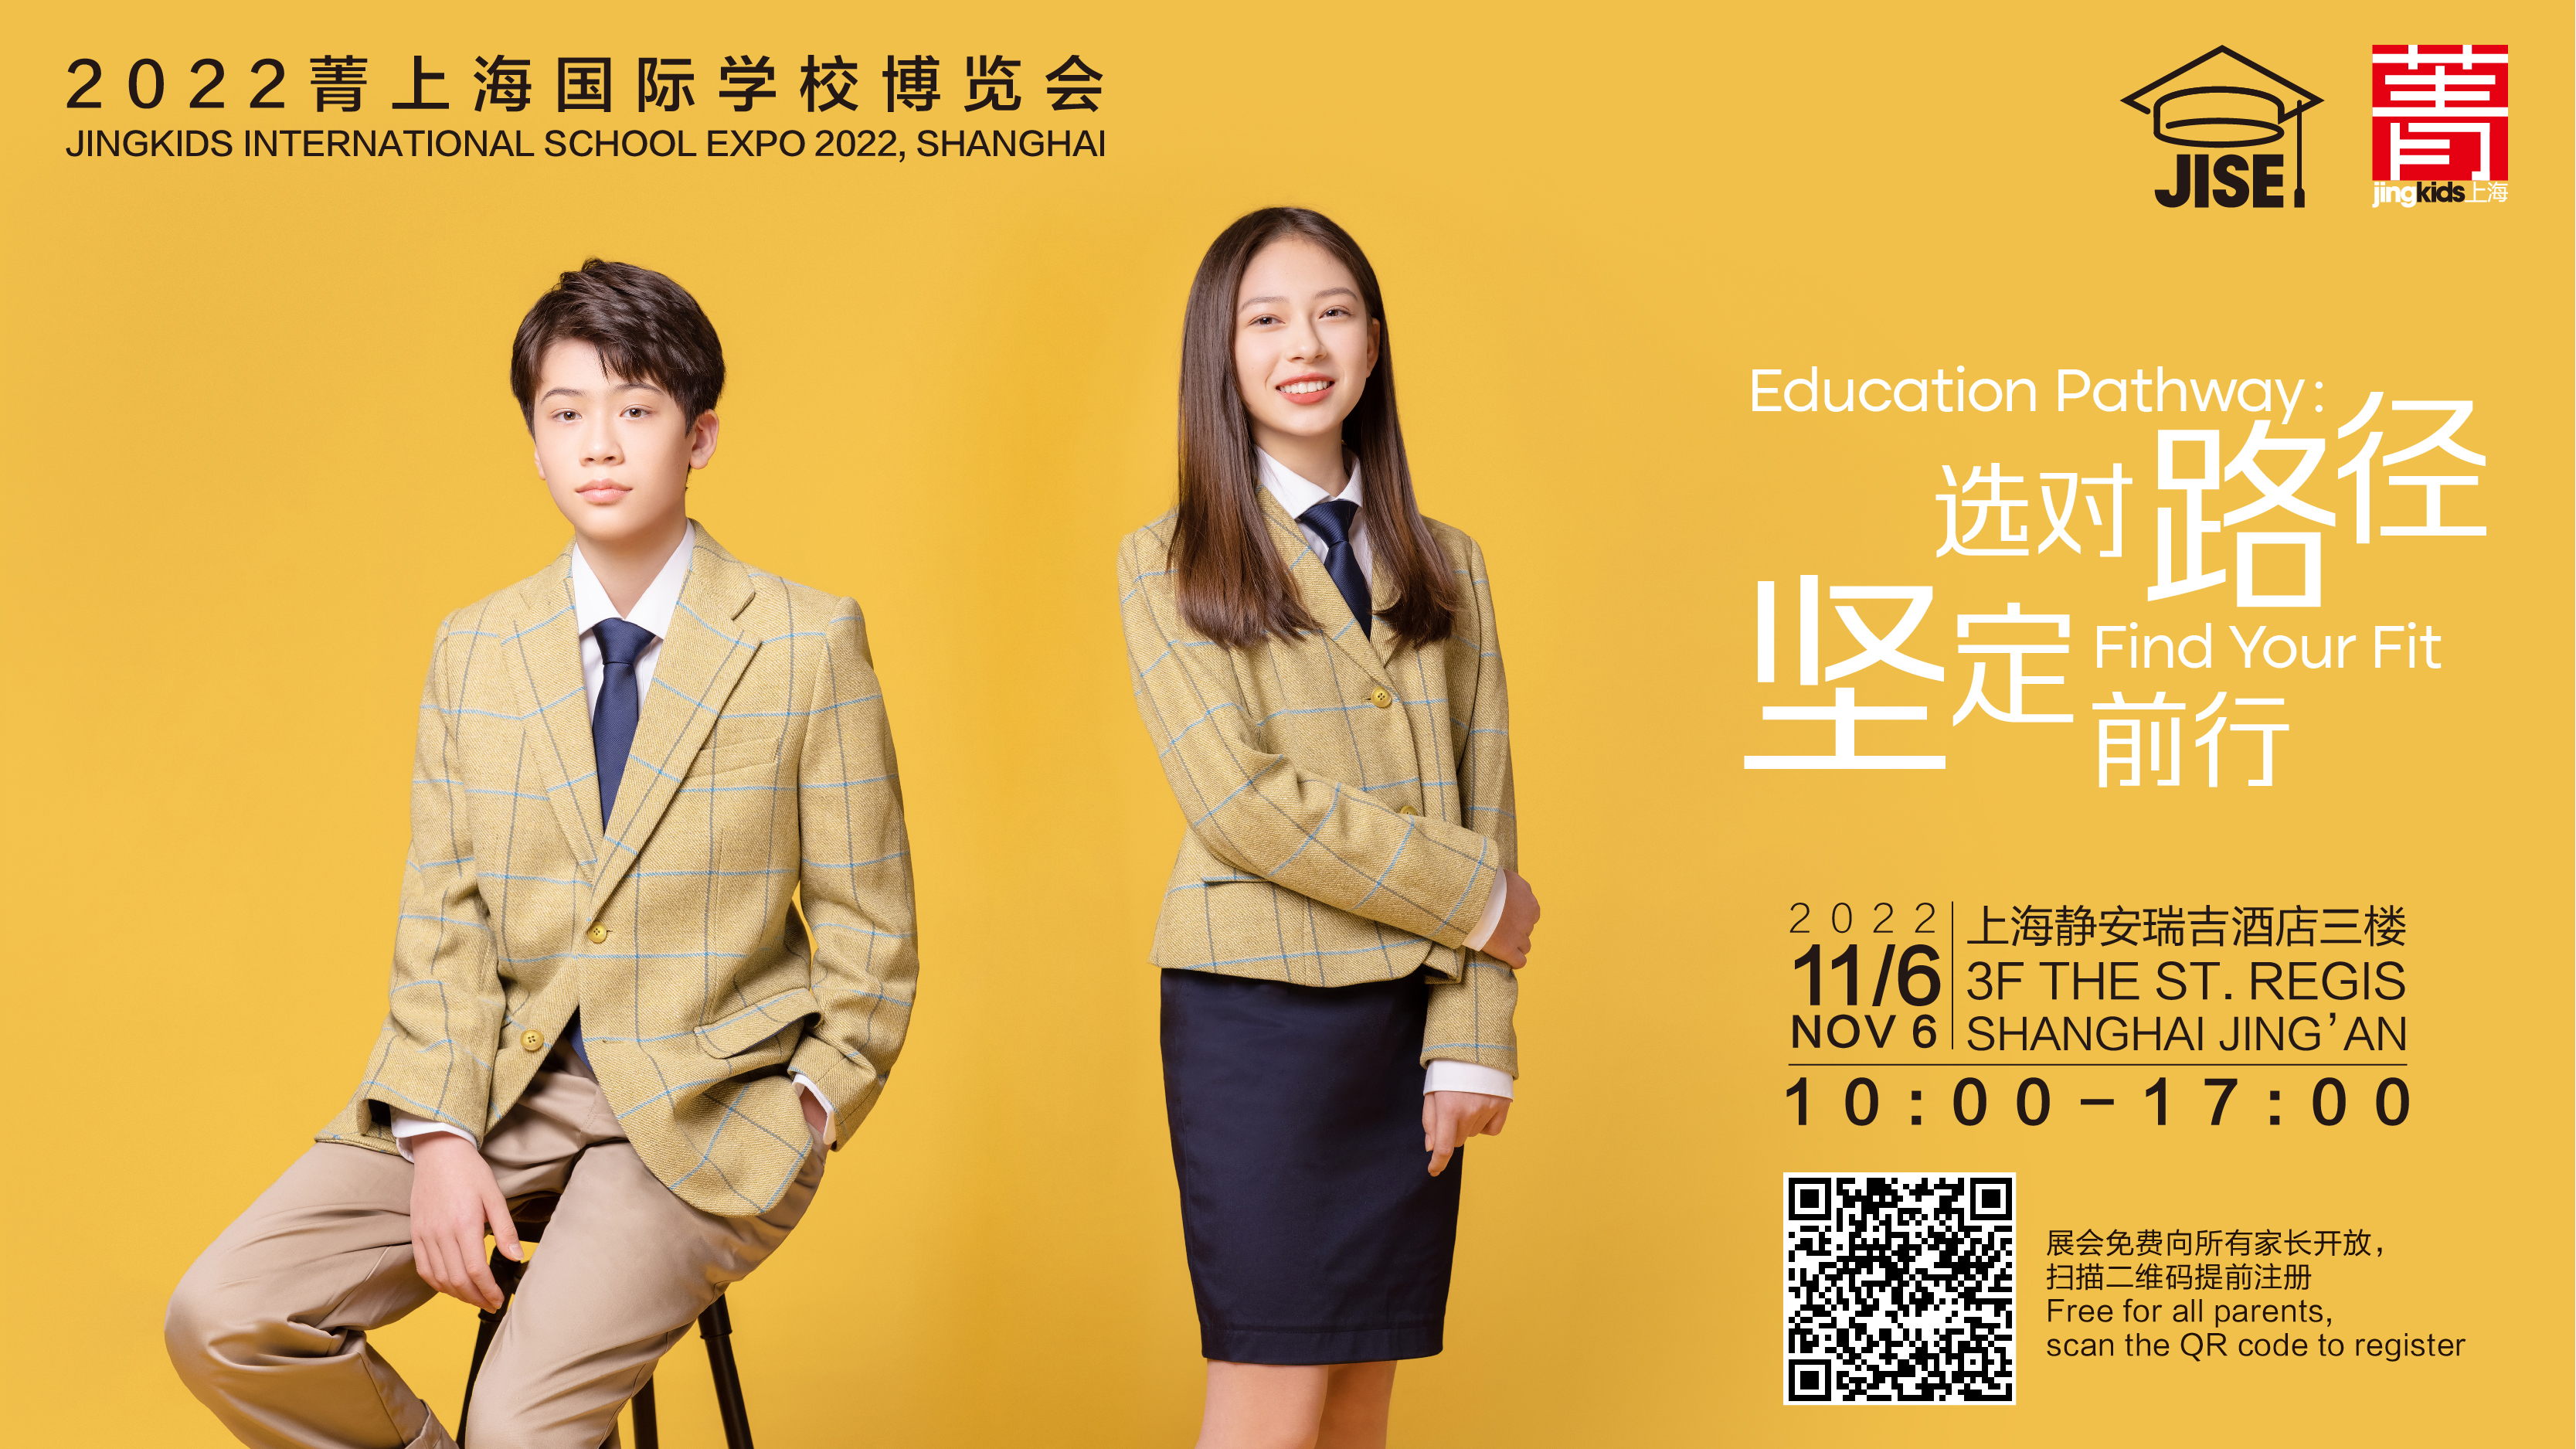 Jingkids International School Expo 2022, Shanghai